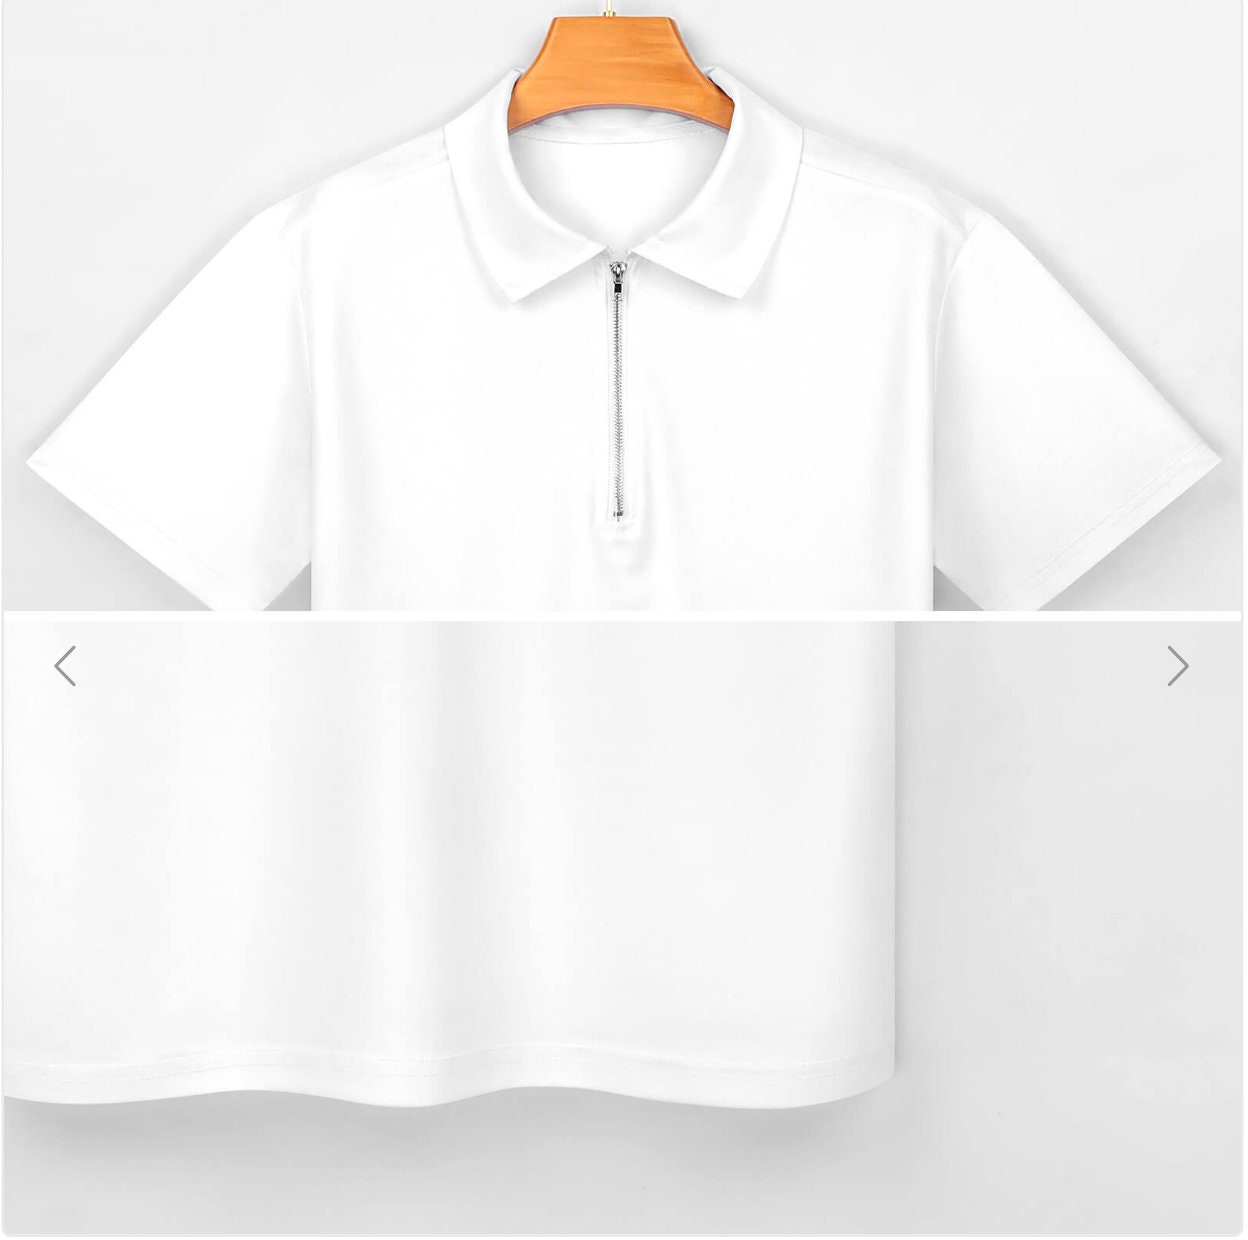 Polo Shirt Men, Men's Polo Shirt, 60s style shirt men, Zipper polo shirt,Black Geometric Shirt, Retro Polo Shirt, Vintage inspired Shirt Men